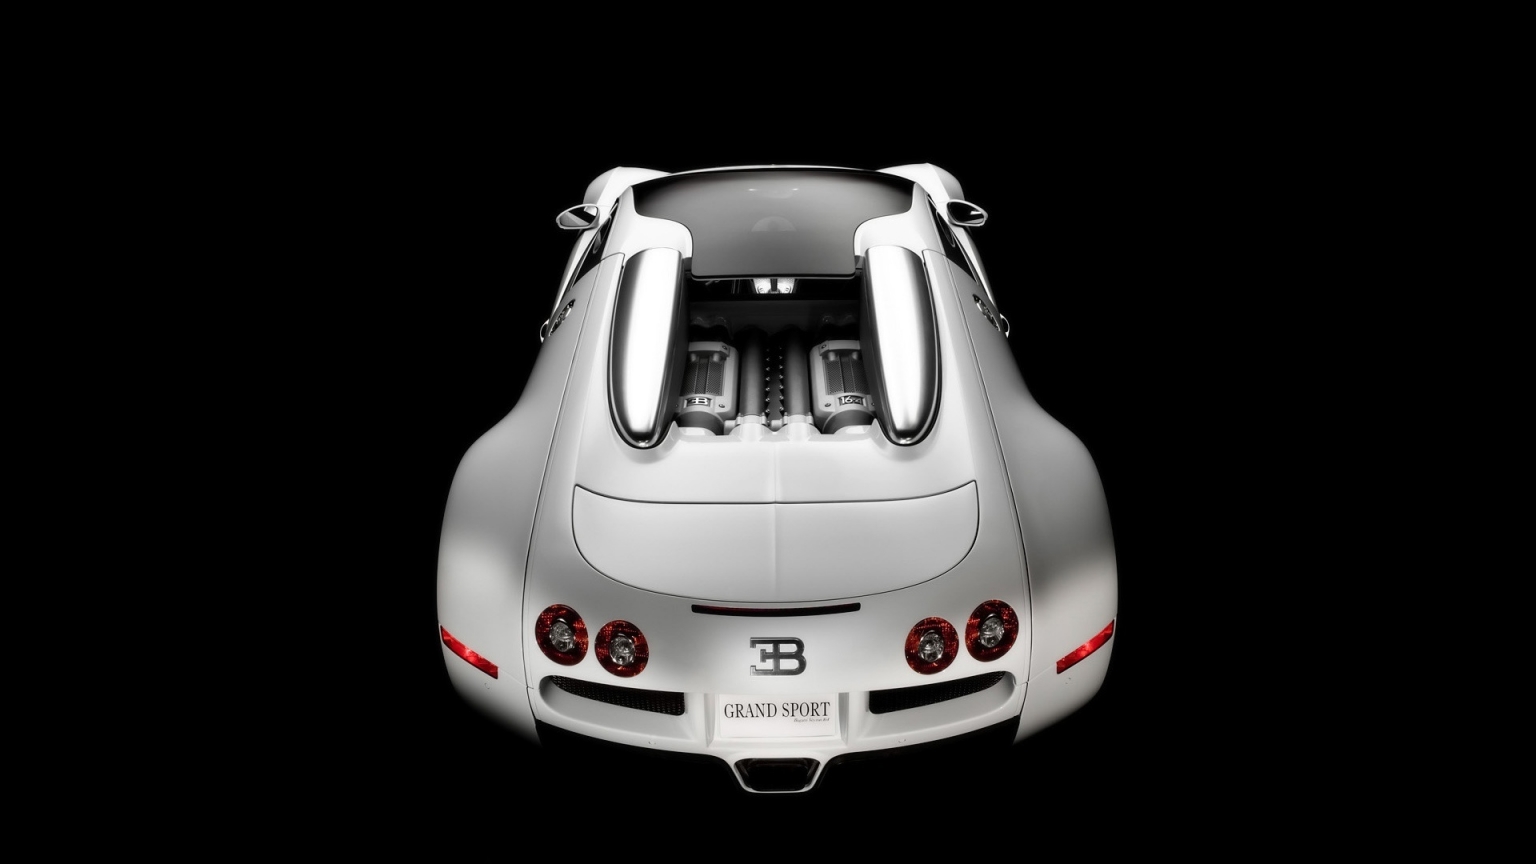 Bugatti Veyron 16.4 Grand Sport Production Version 2009 - Studio Rear Top for 1536 x 864 HDTV resolution